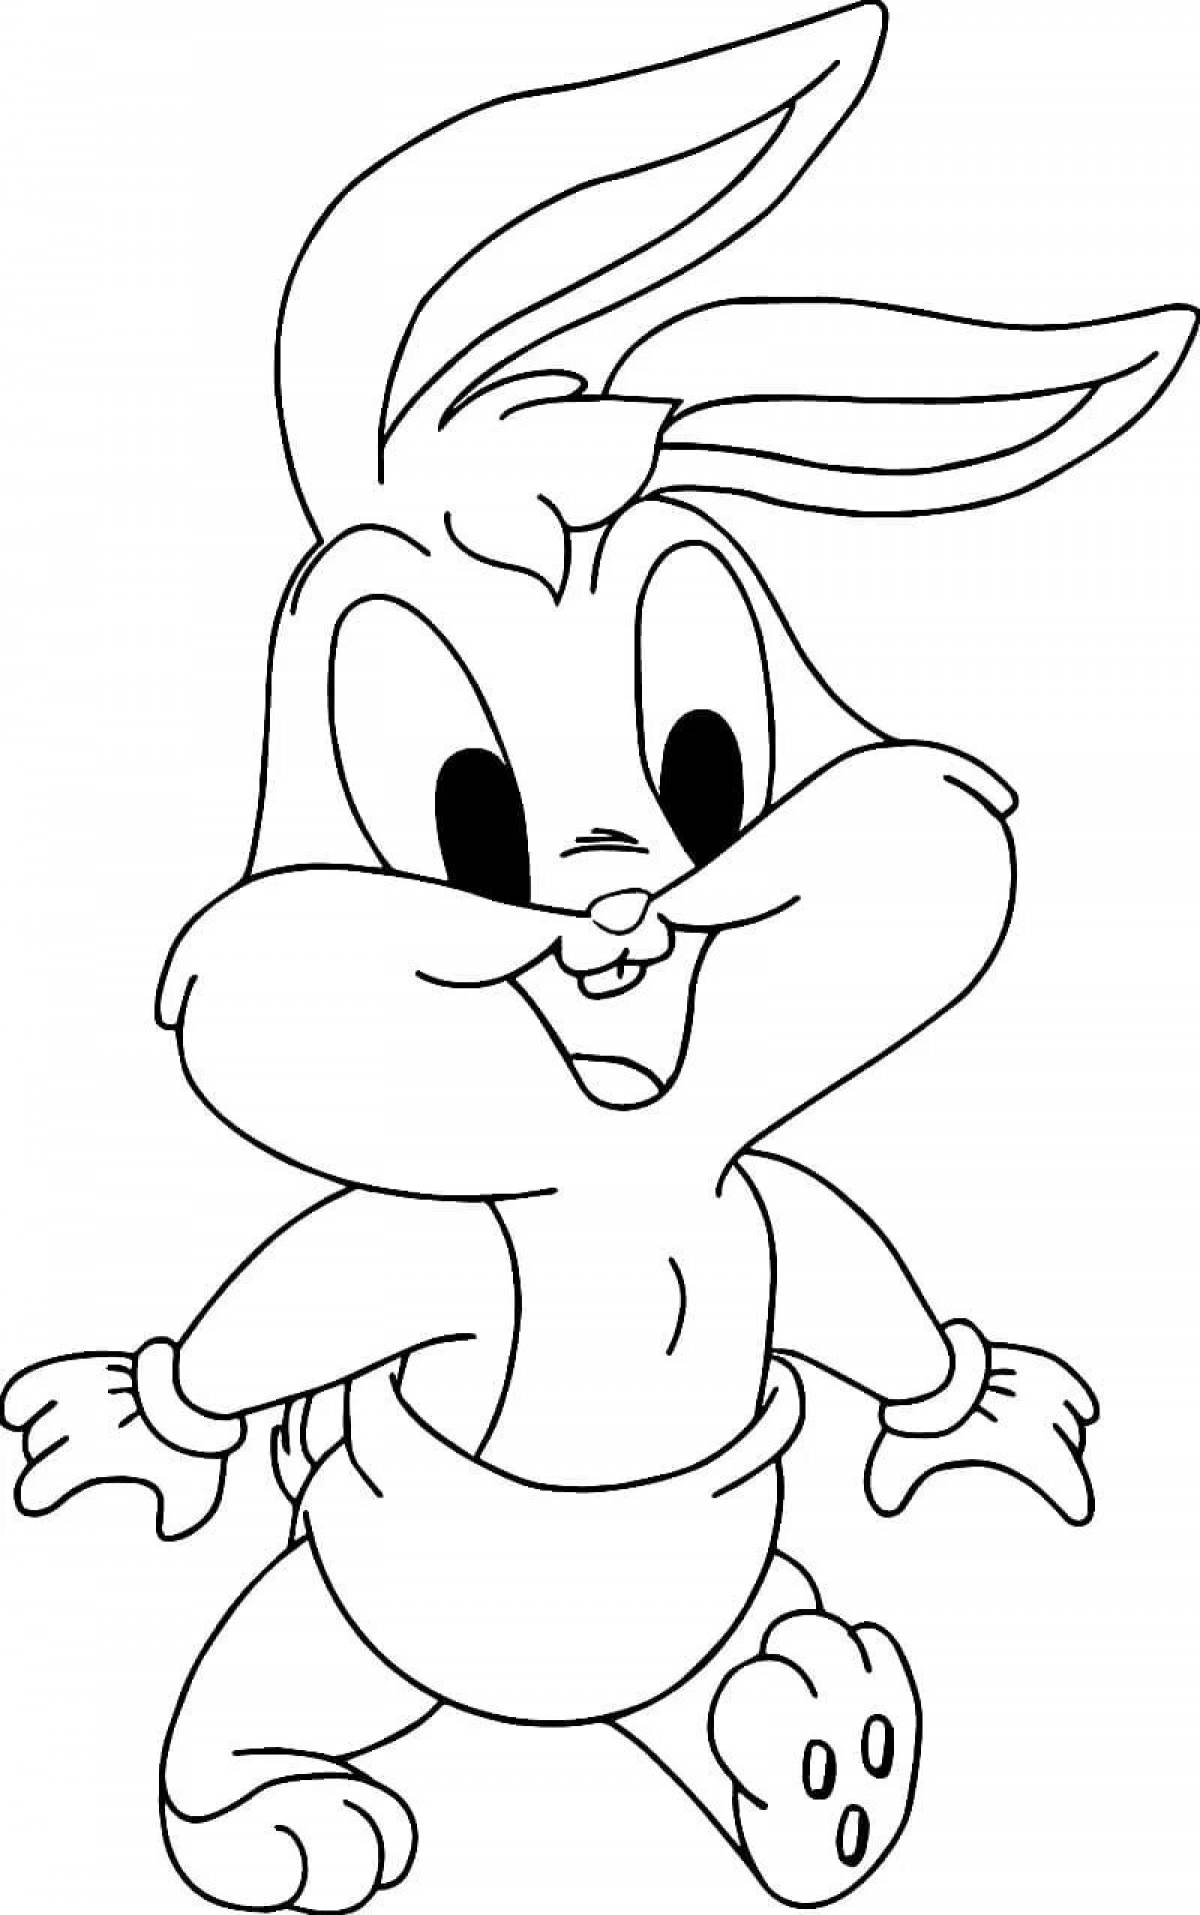 Cartoon bunny #1